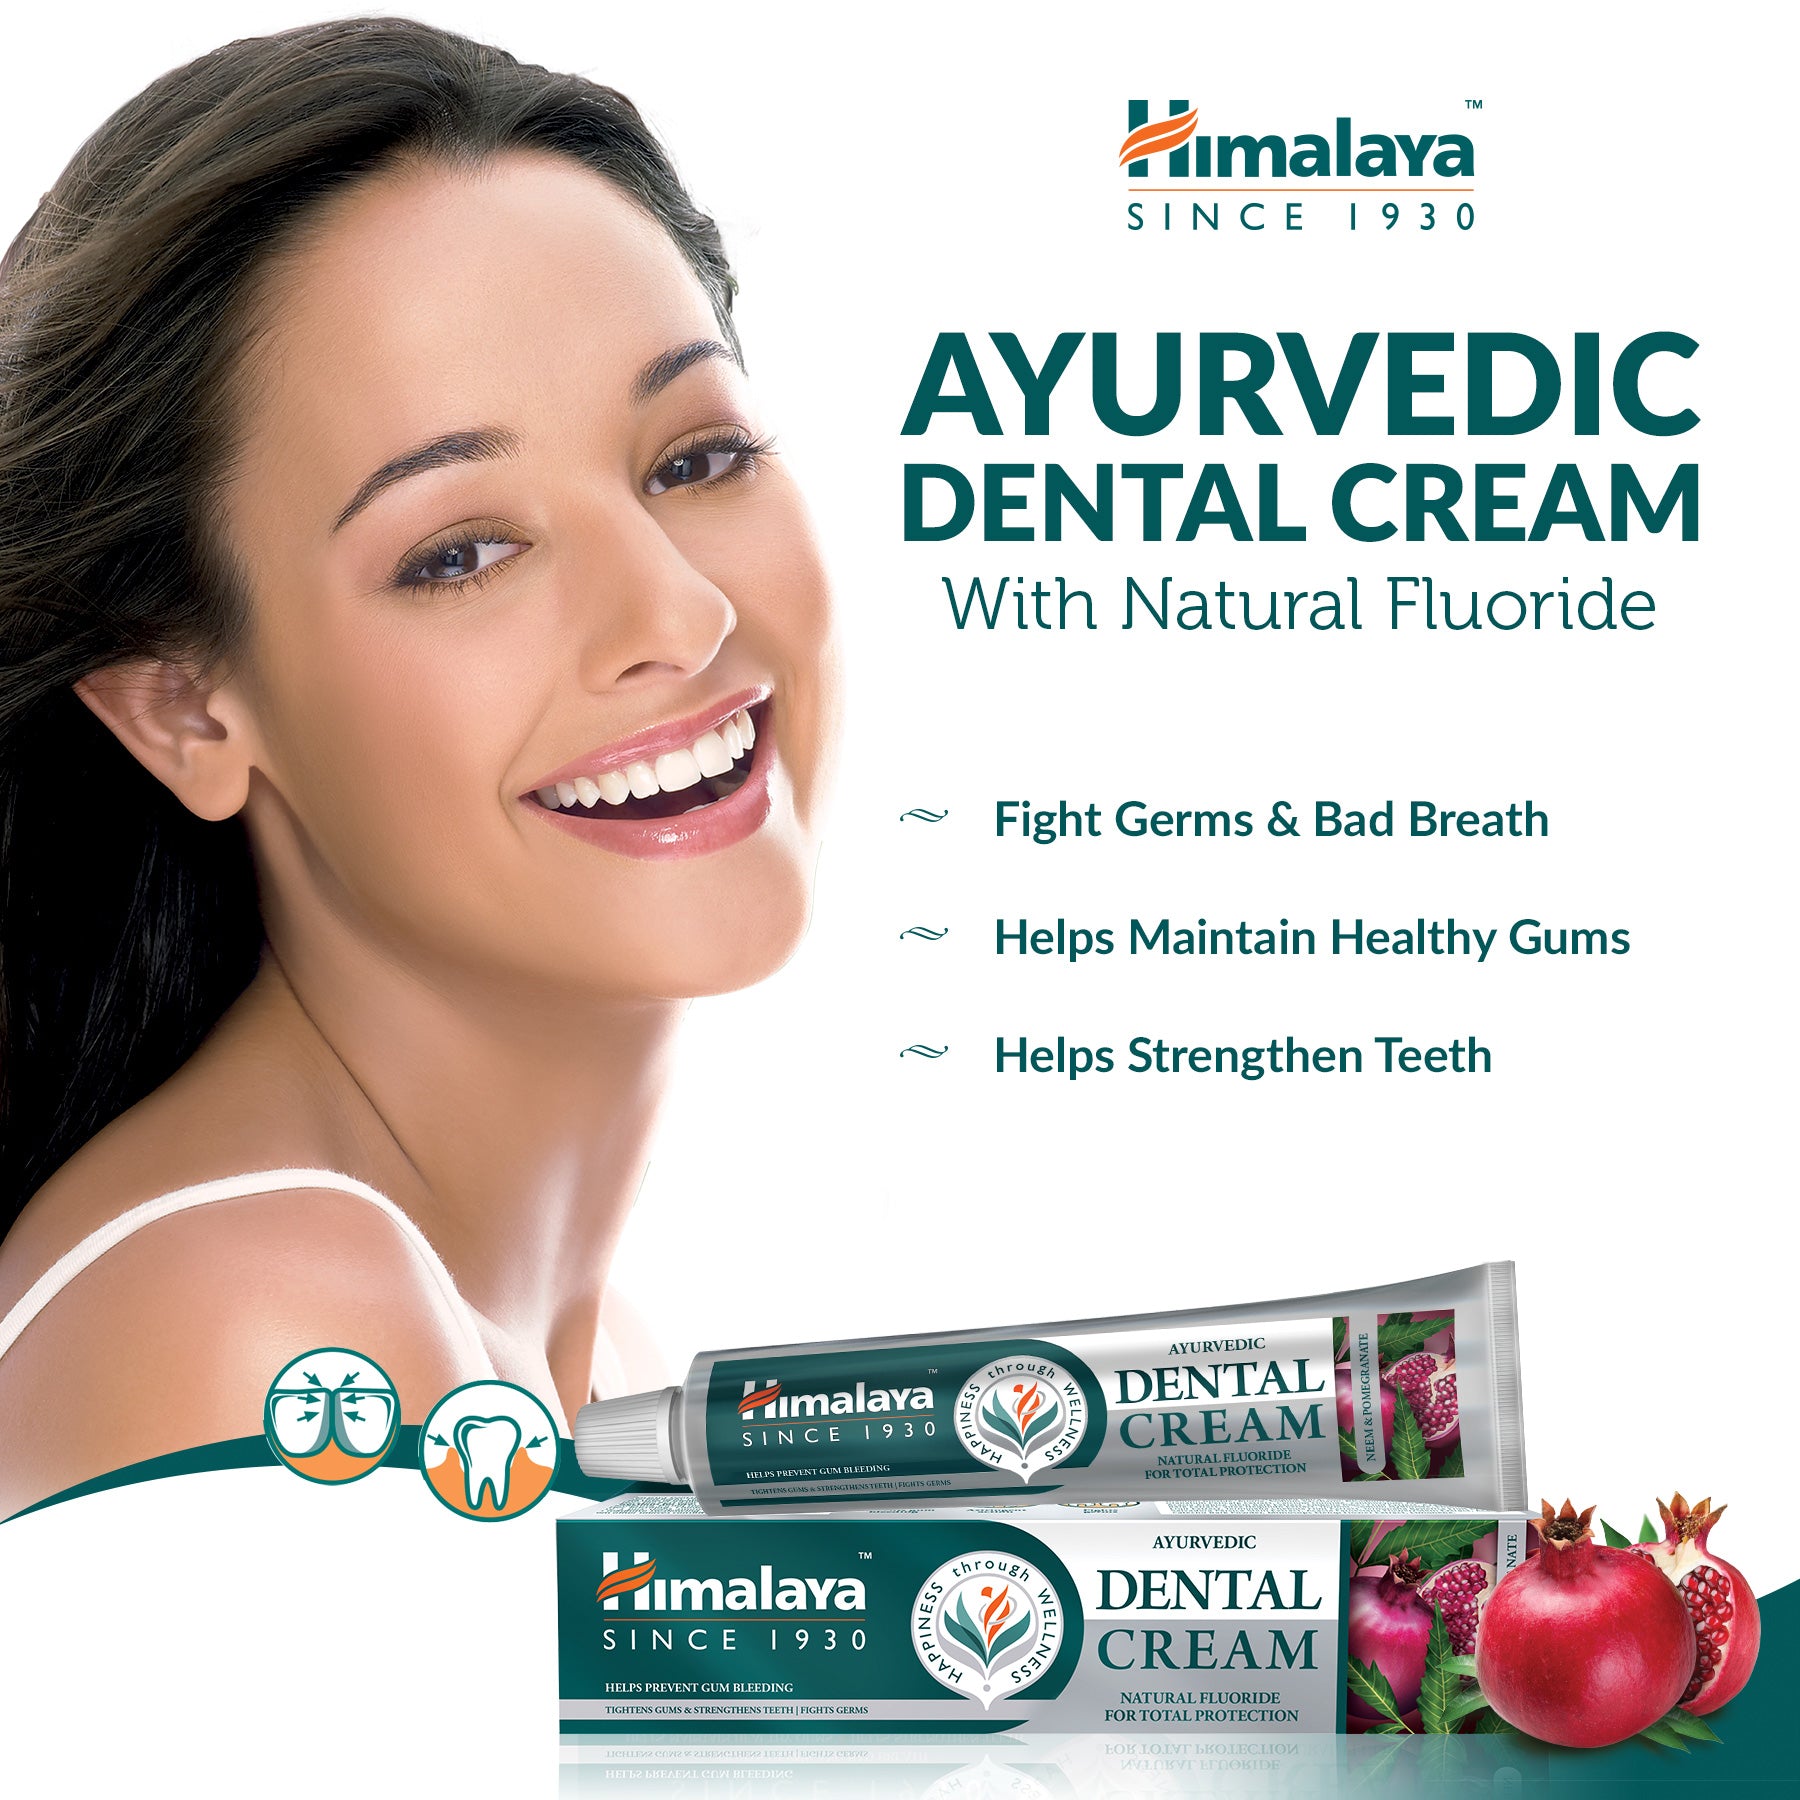 Himalaya Ayurvedic Dental Cream Herbal Toothpaste - Neem & Pomegranate - 100 g (Pack of 2)